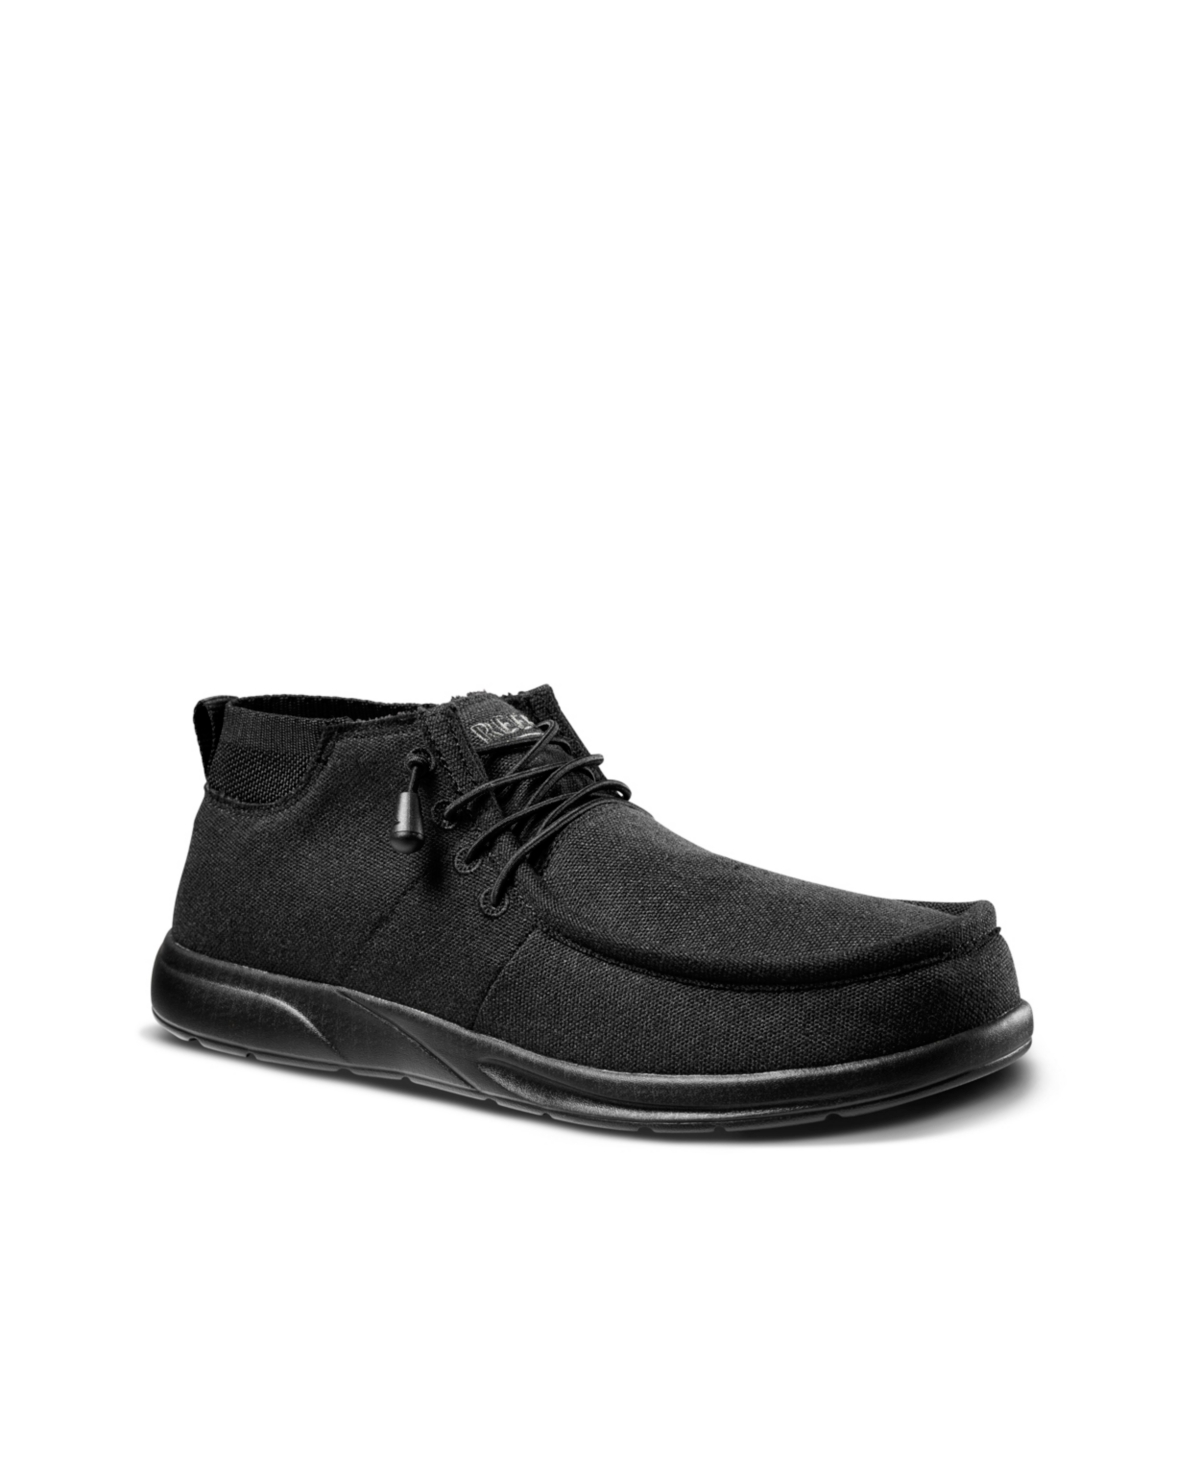 Men's Cushion Coast Comfort Fit Mid Shoes - Black